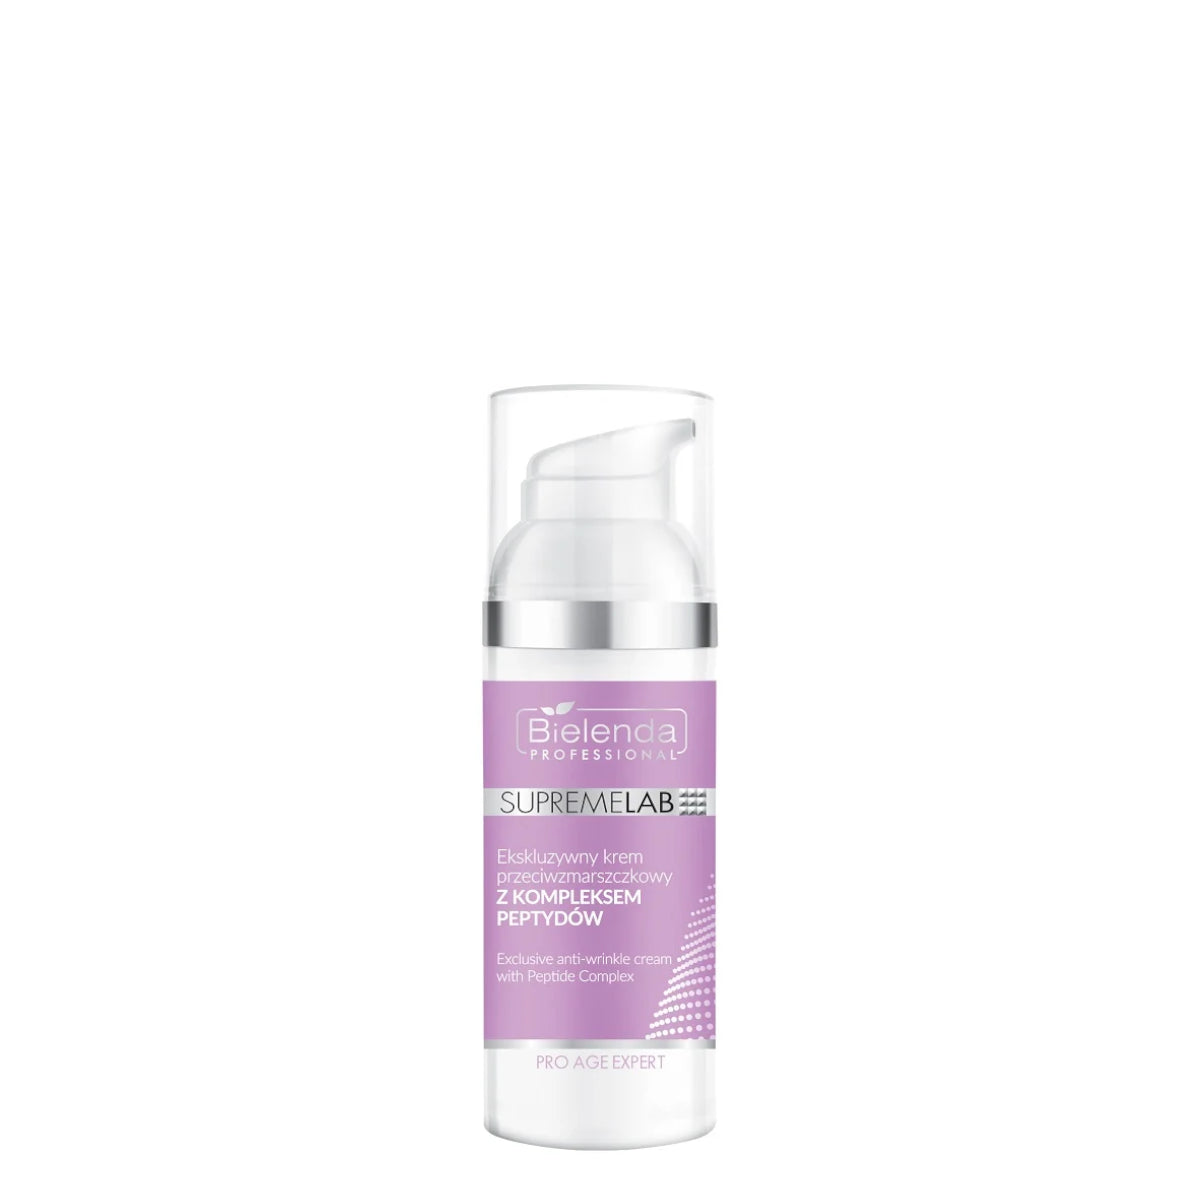 Bielenda Professional SupremeLab Pro Age Expert Exclusive Anti-Wrinkle Face Cream Bottle - Roxie Cosmetics